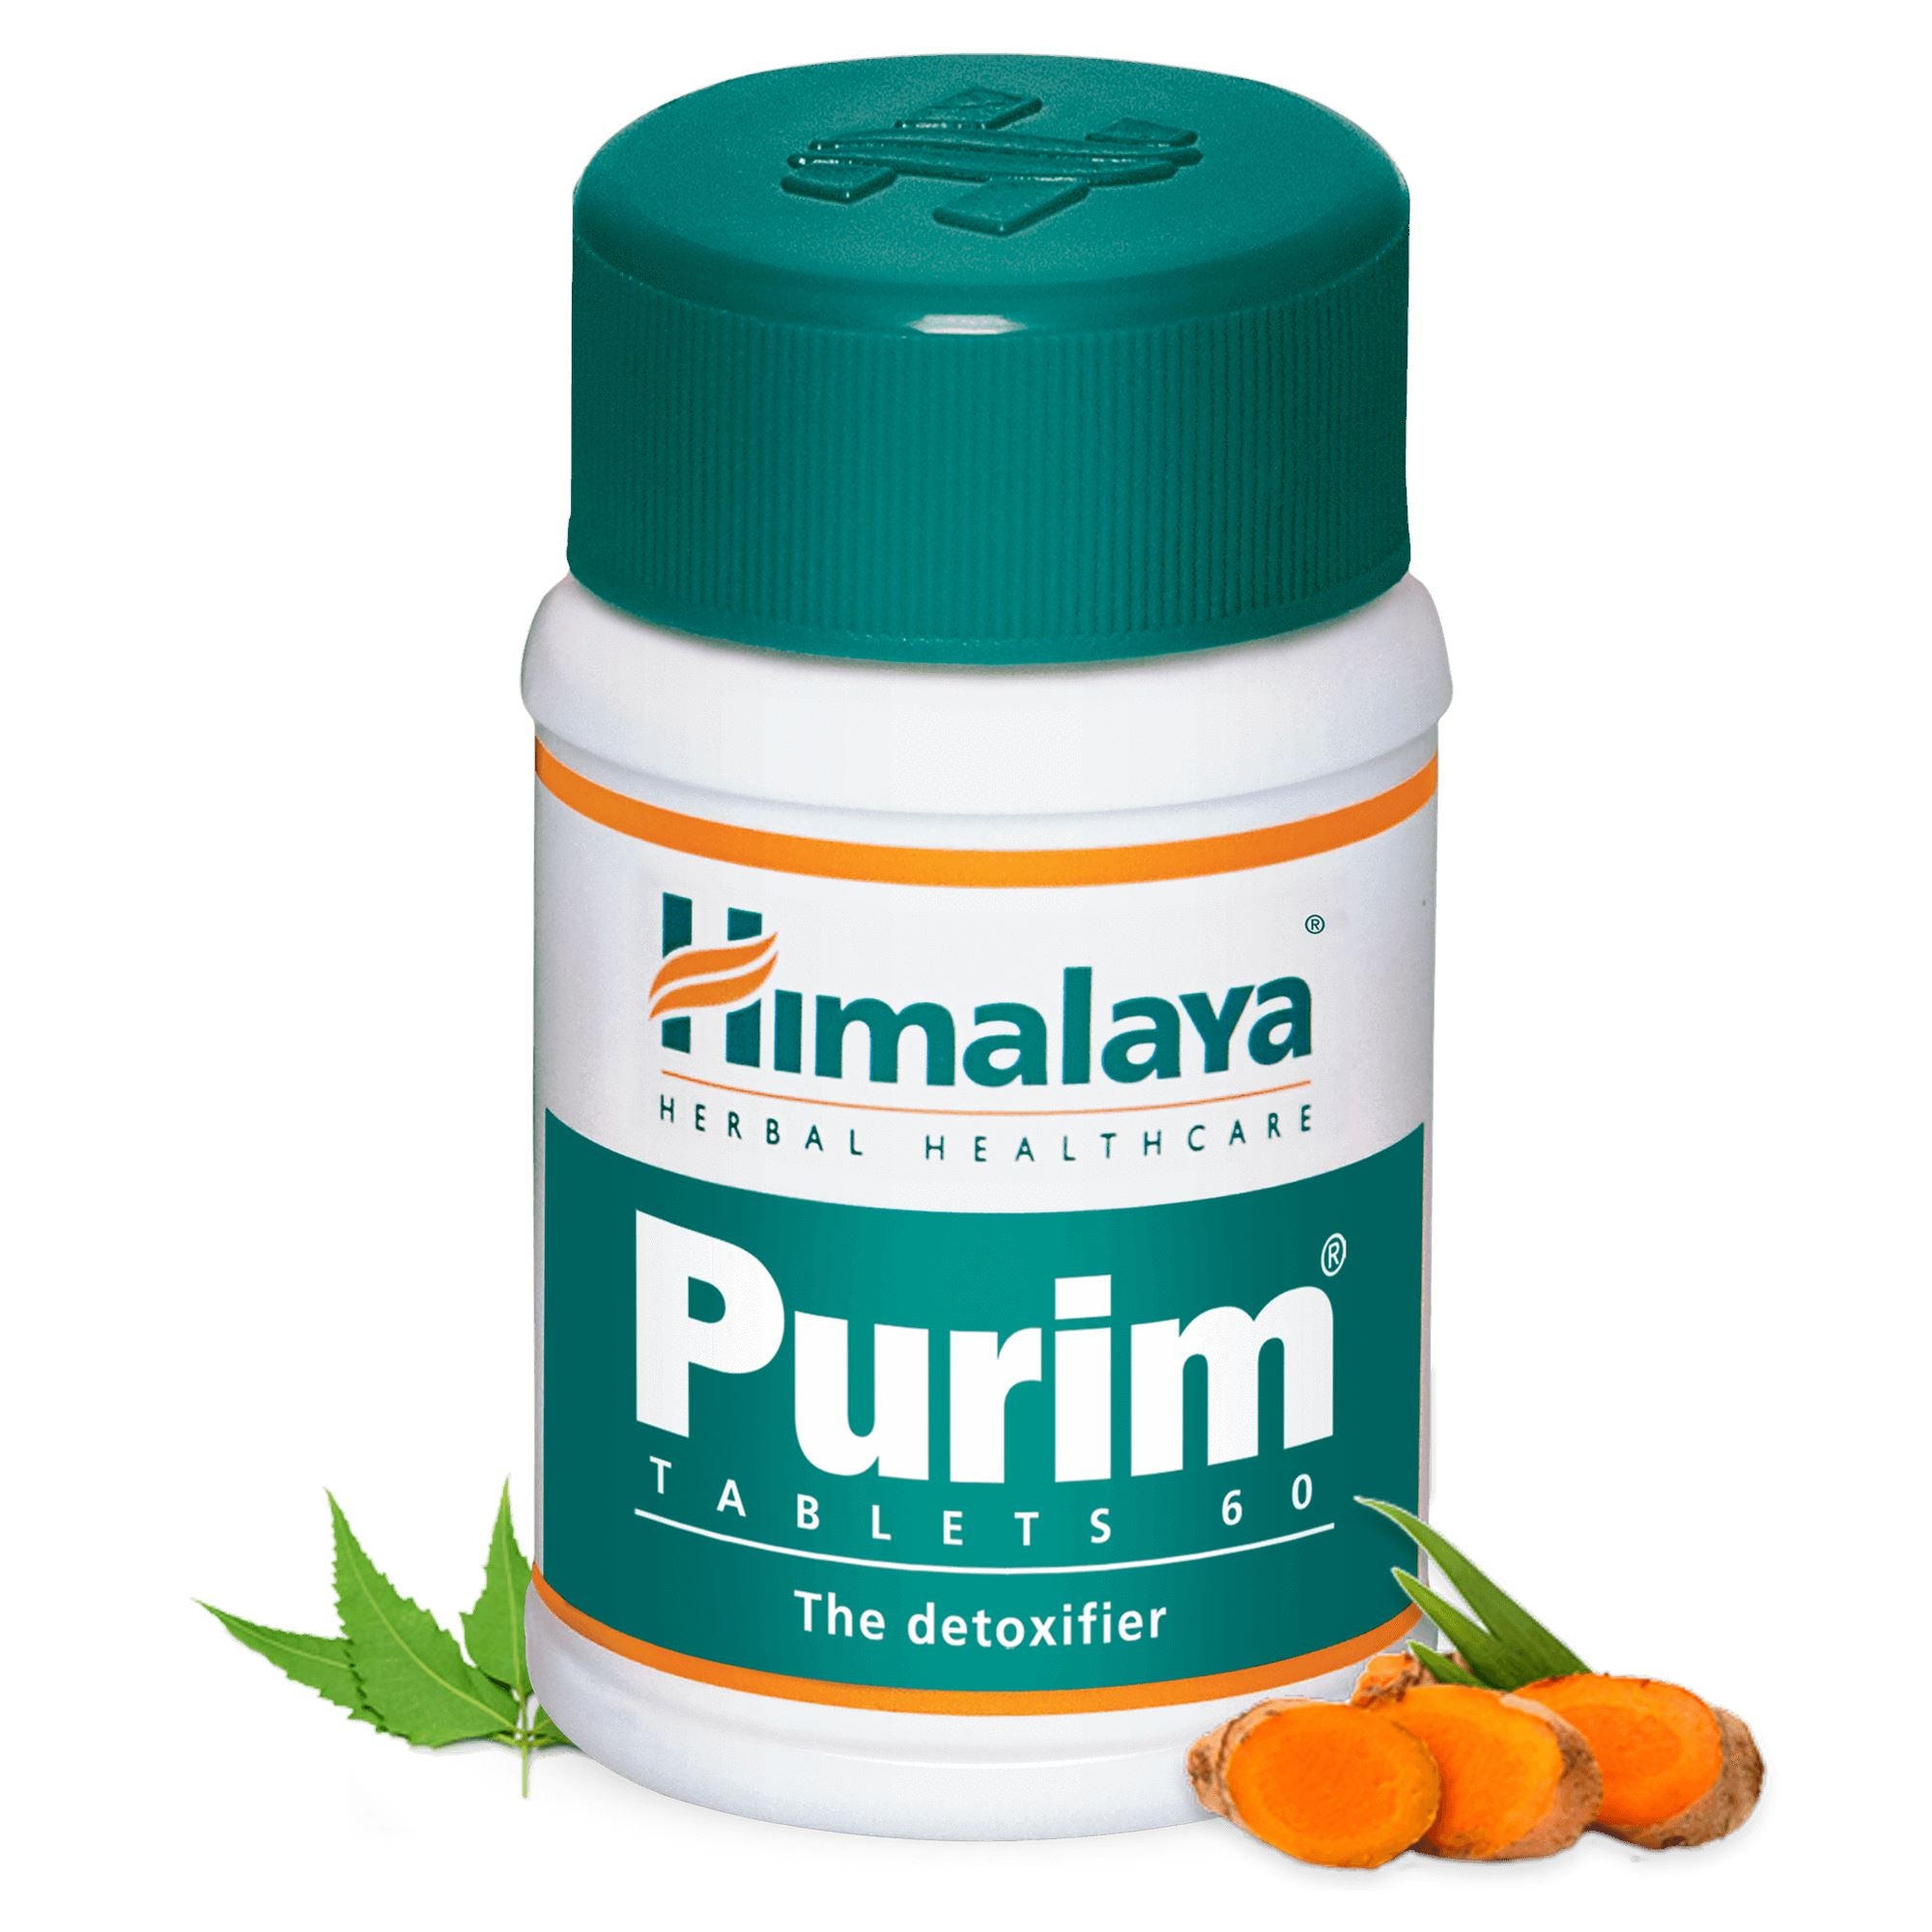 Himalaya Purim Tablet - Combats Skin Disease 